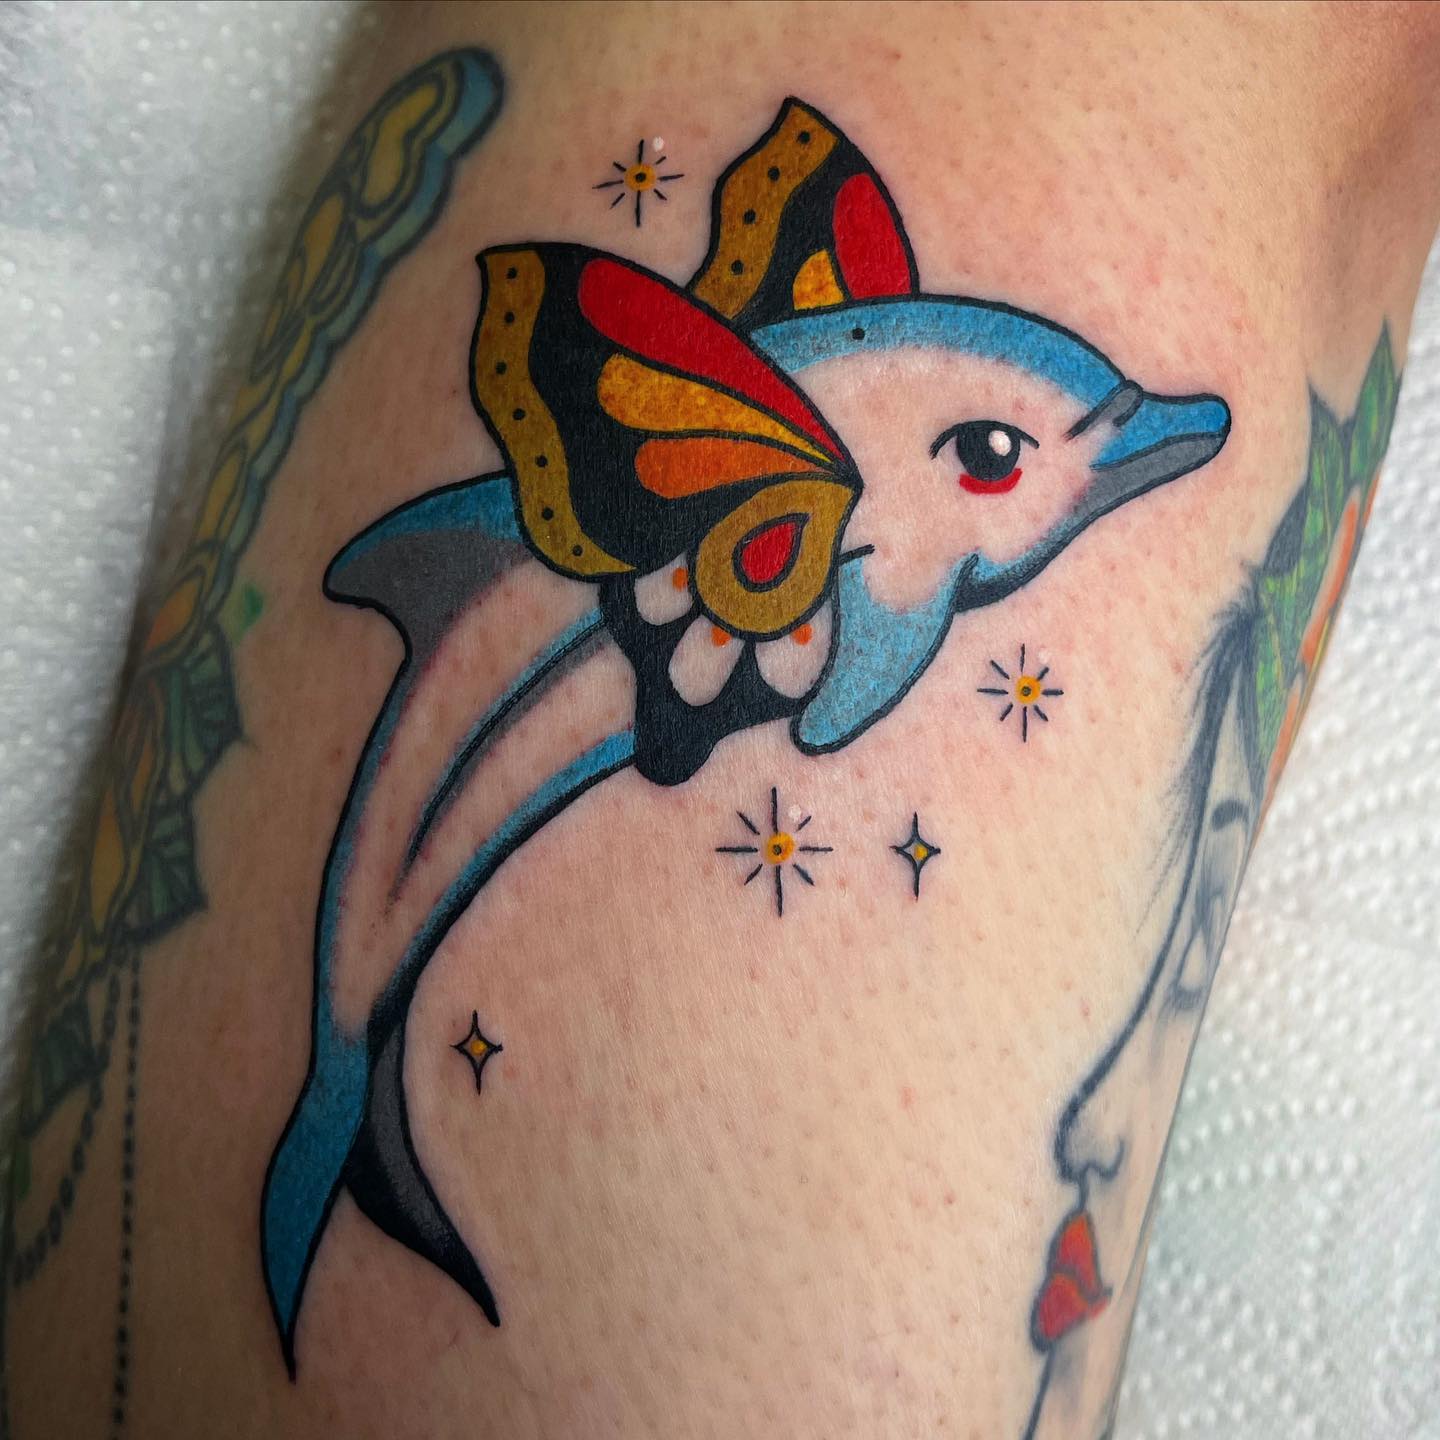 Tatuaje divertido de delfín